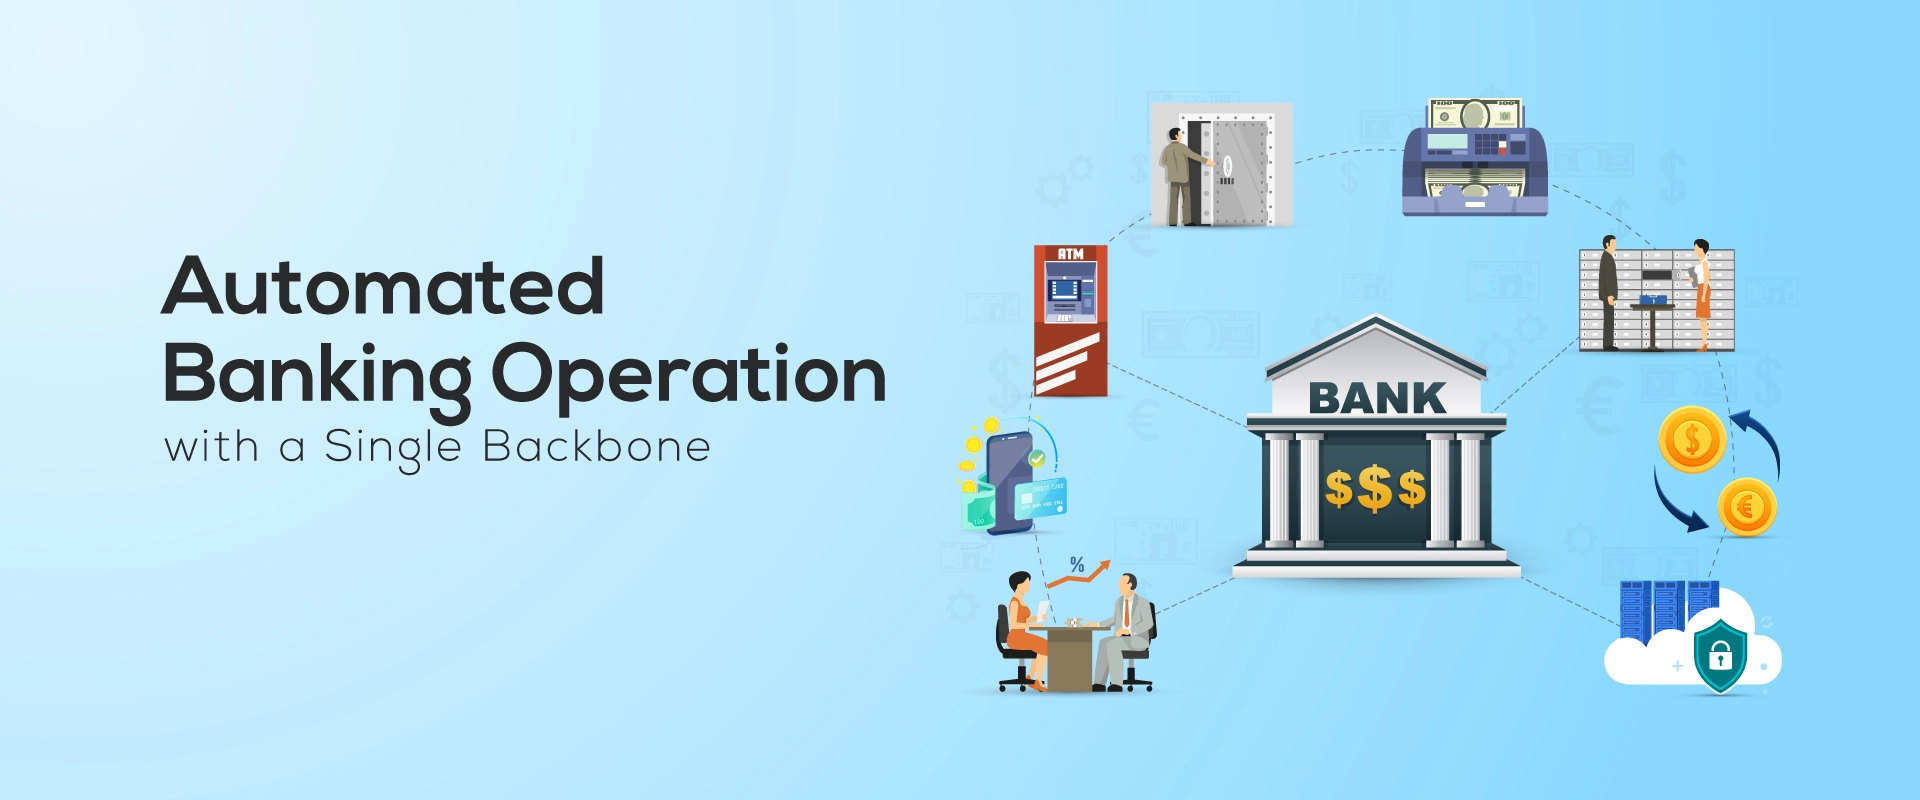 Automated Banking Operation